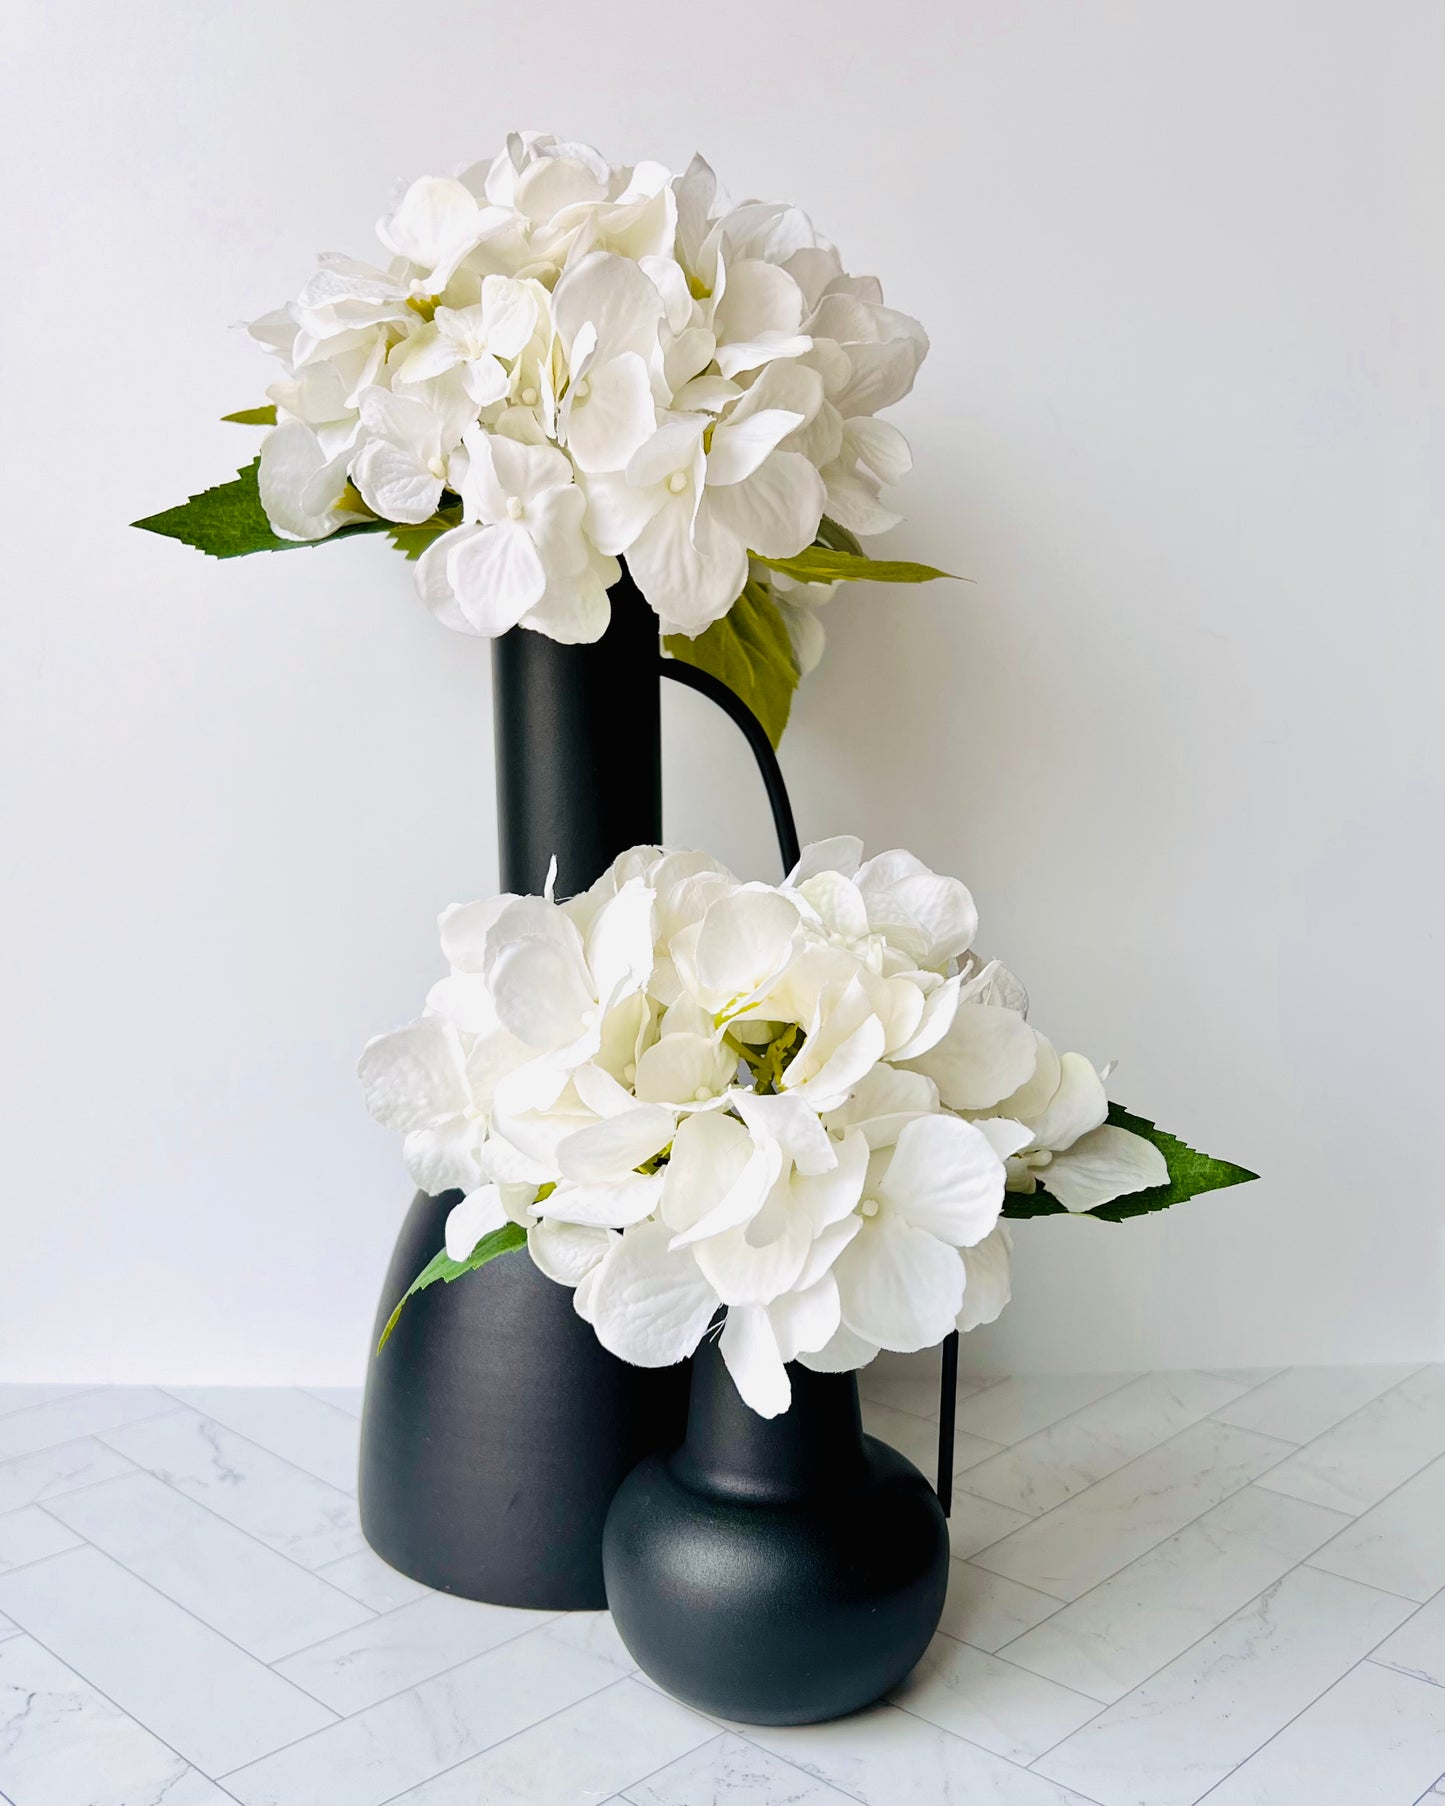 The Sleek Black Vase behind the Sleek Bud Vase both filled with white flowers